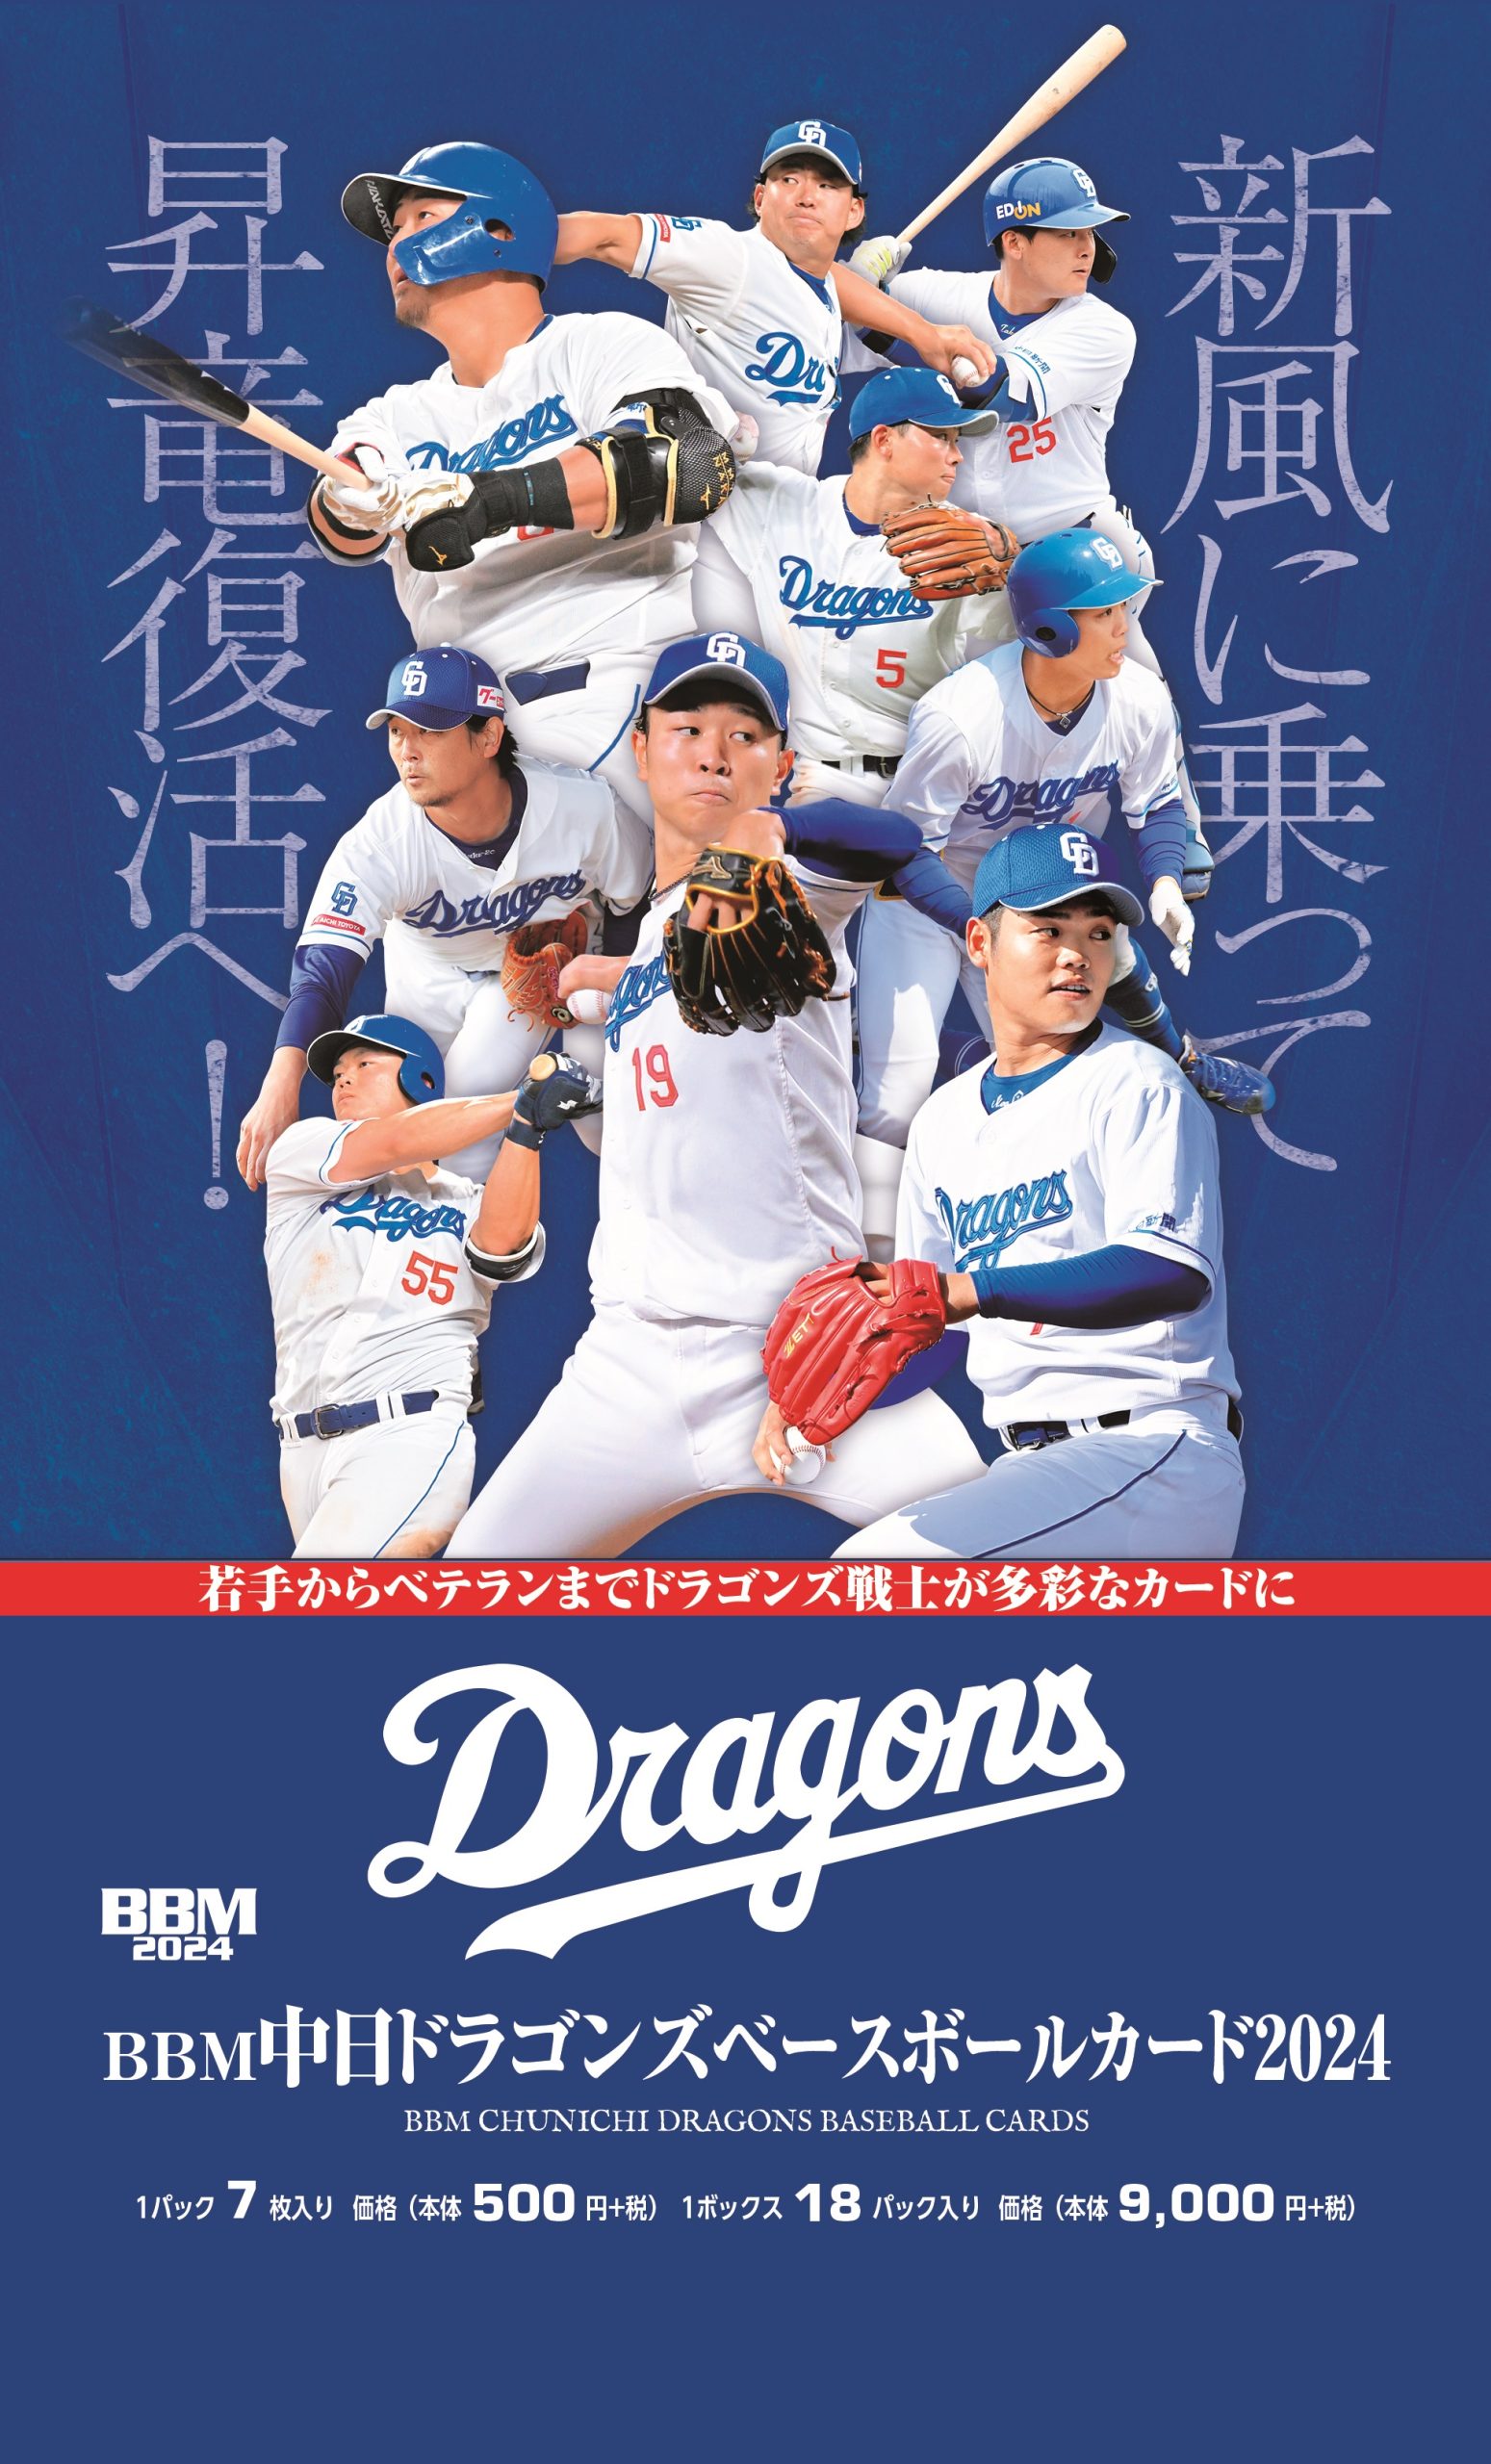 ⚾ BBM 中日ドラゴンズ ベースボールカード 2024【製品情報 